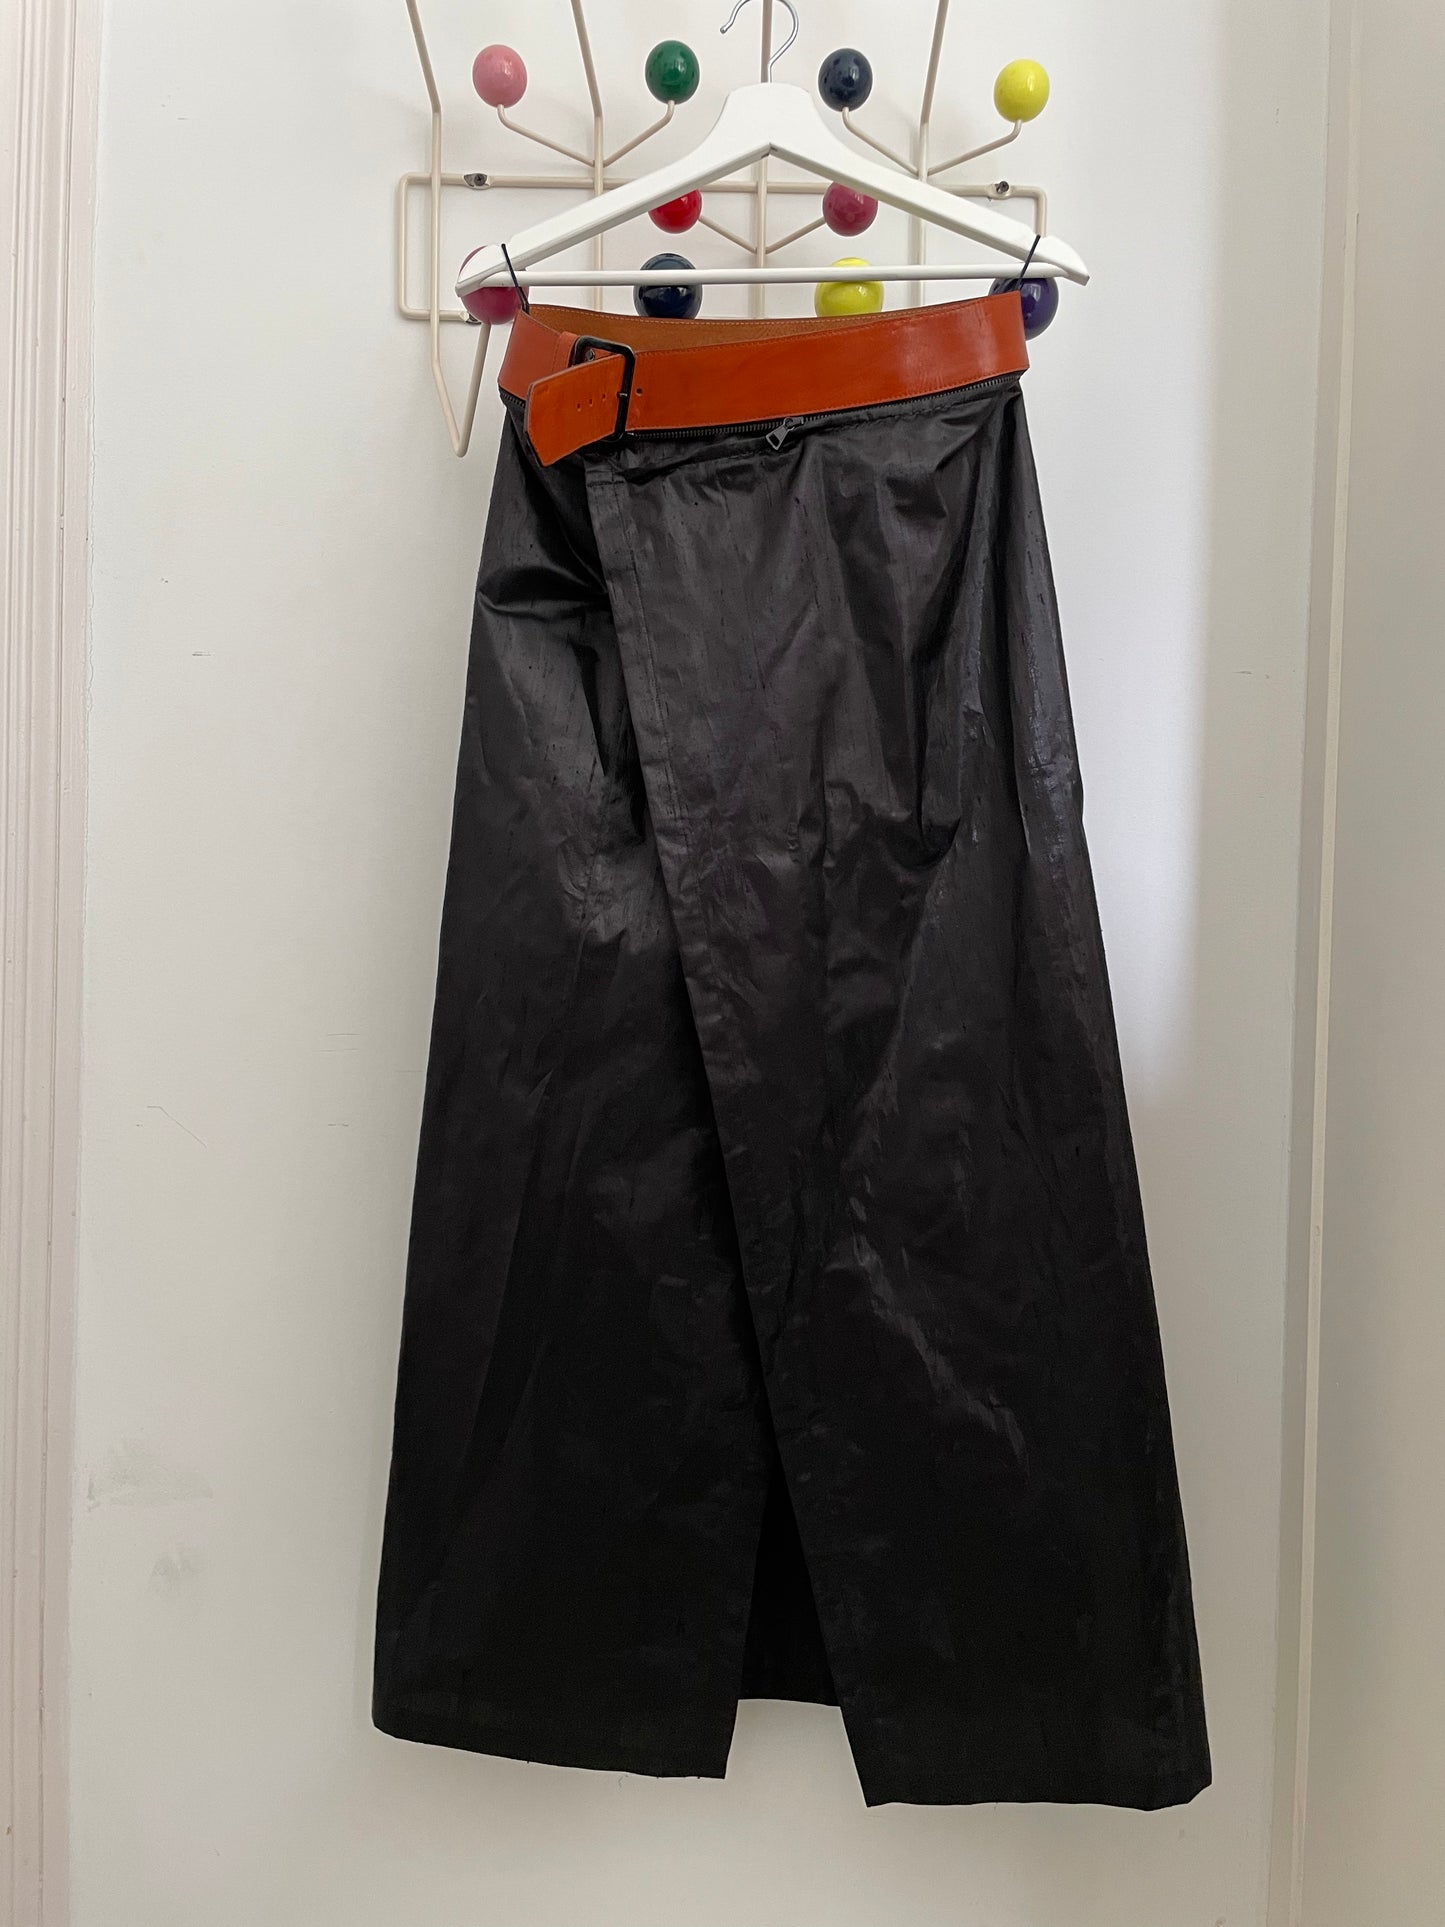 Jean Paul Gaultier SS 2000 black silk skirt with zipped leather belt